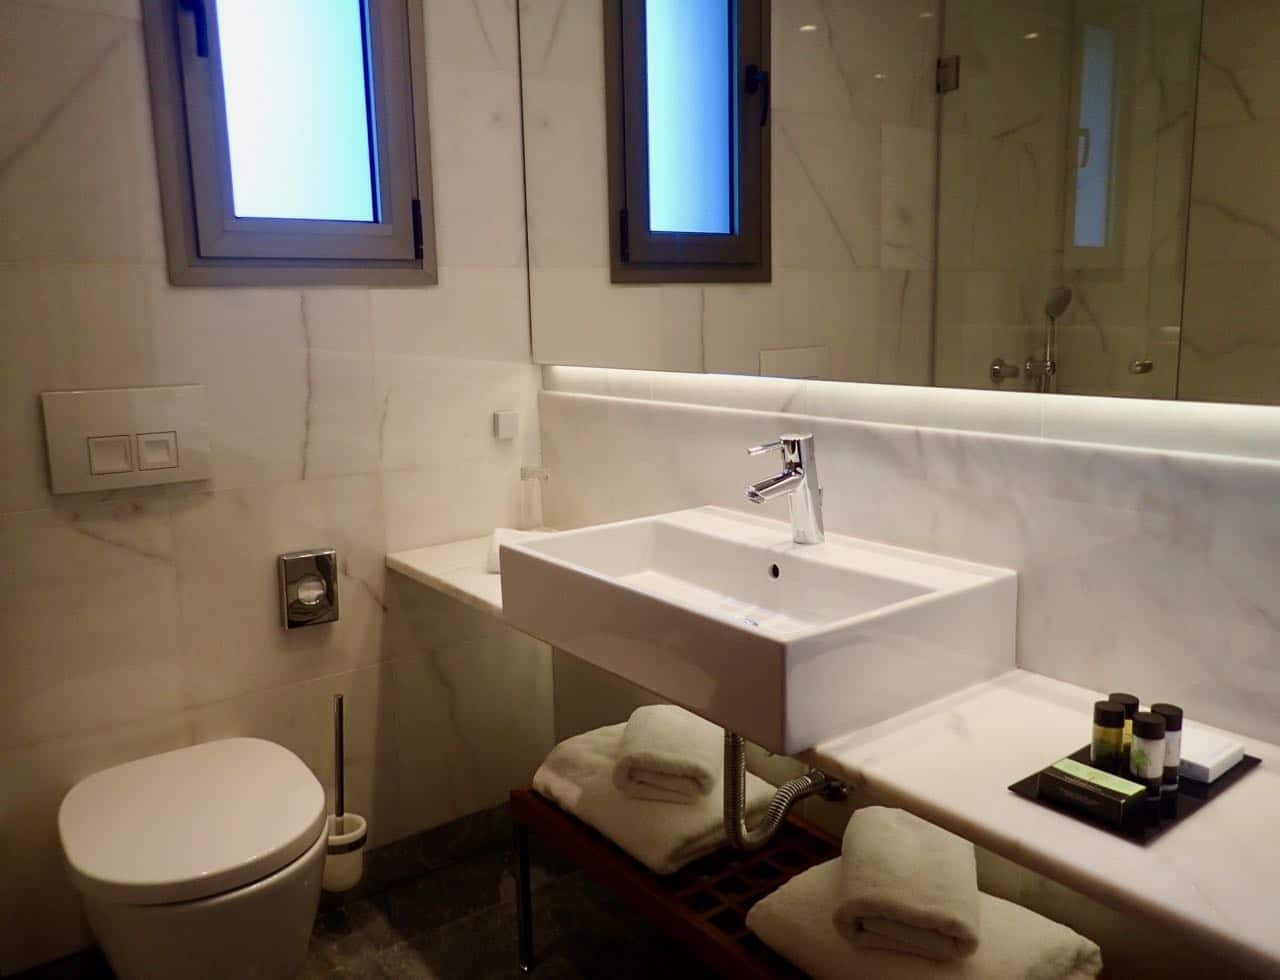 Samaria Hotel Chania bathroom review